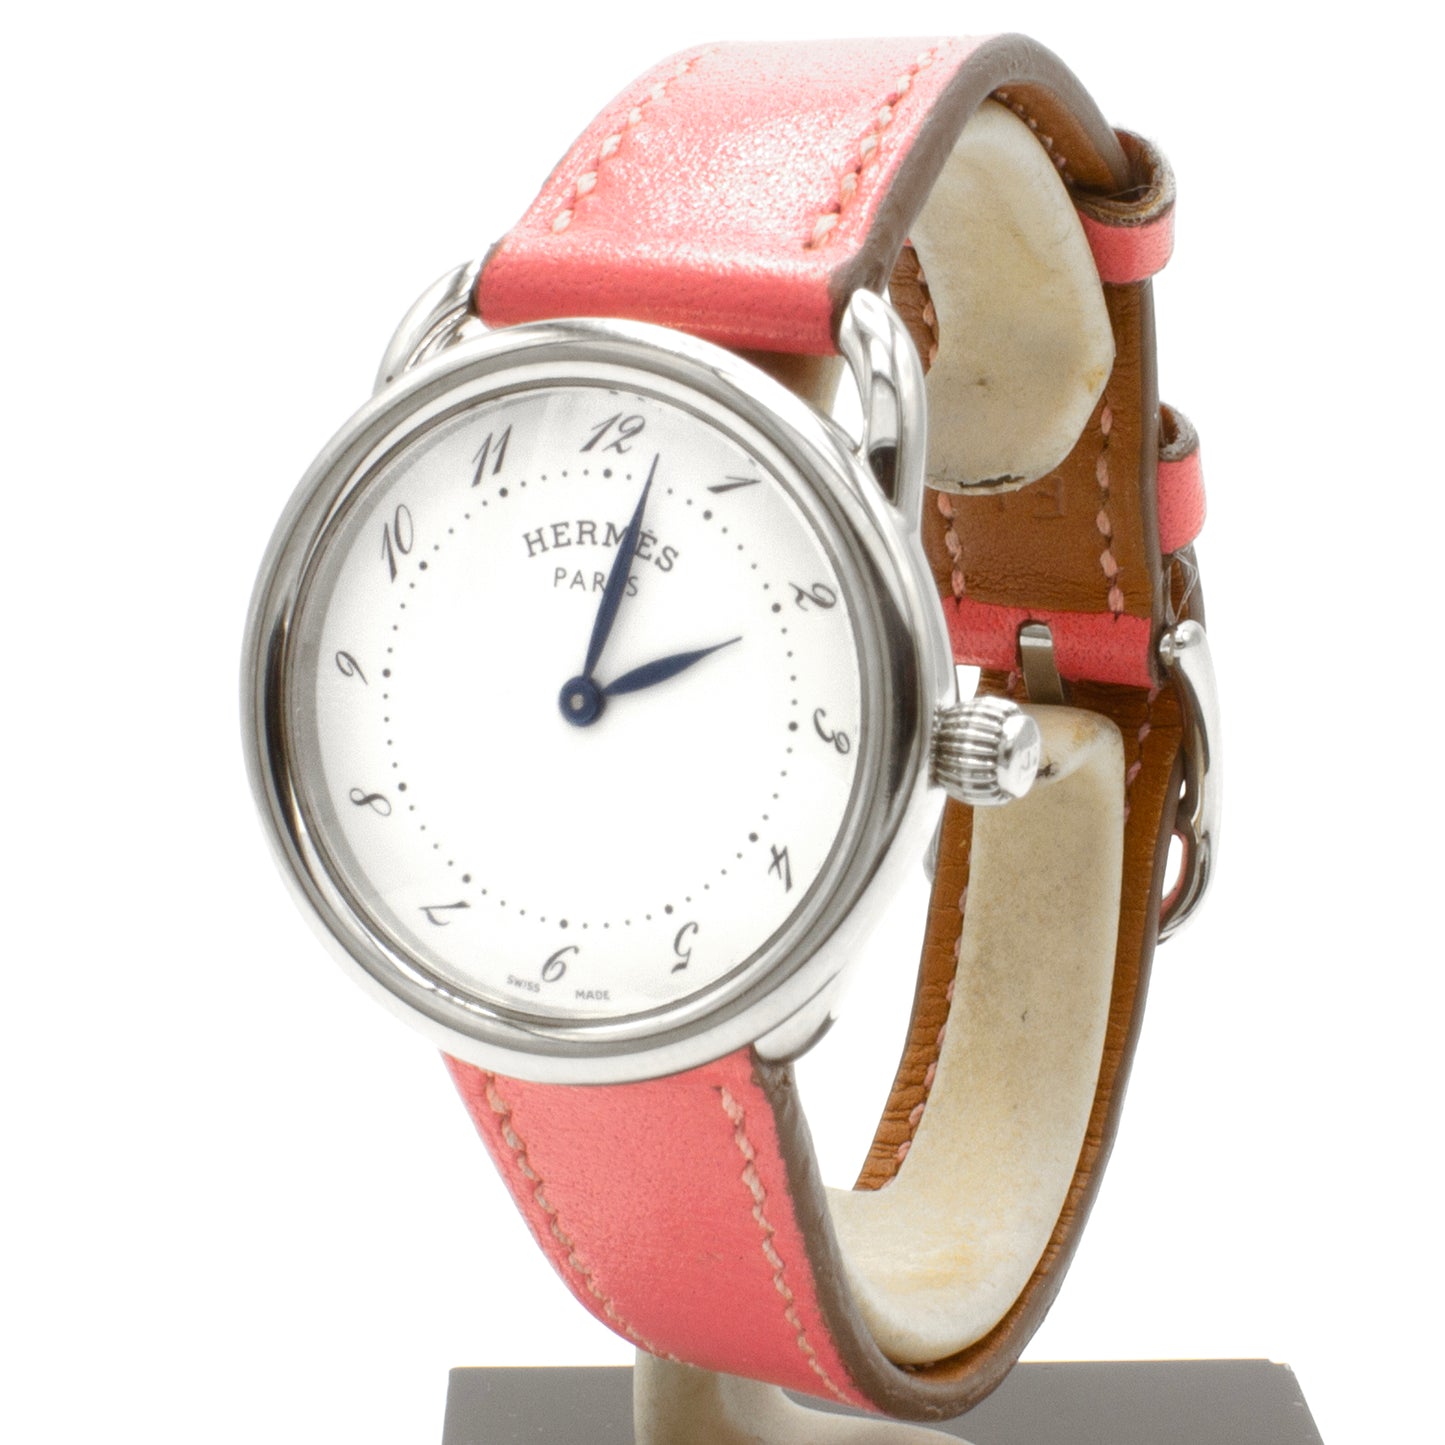 Hermès Arceau AR5.210a watch